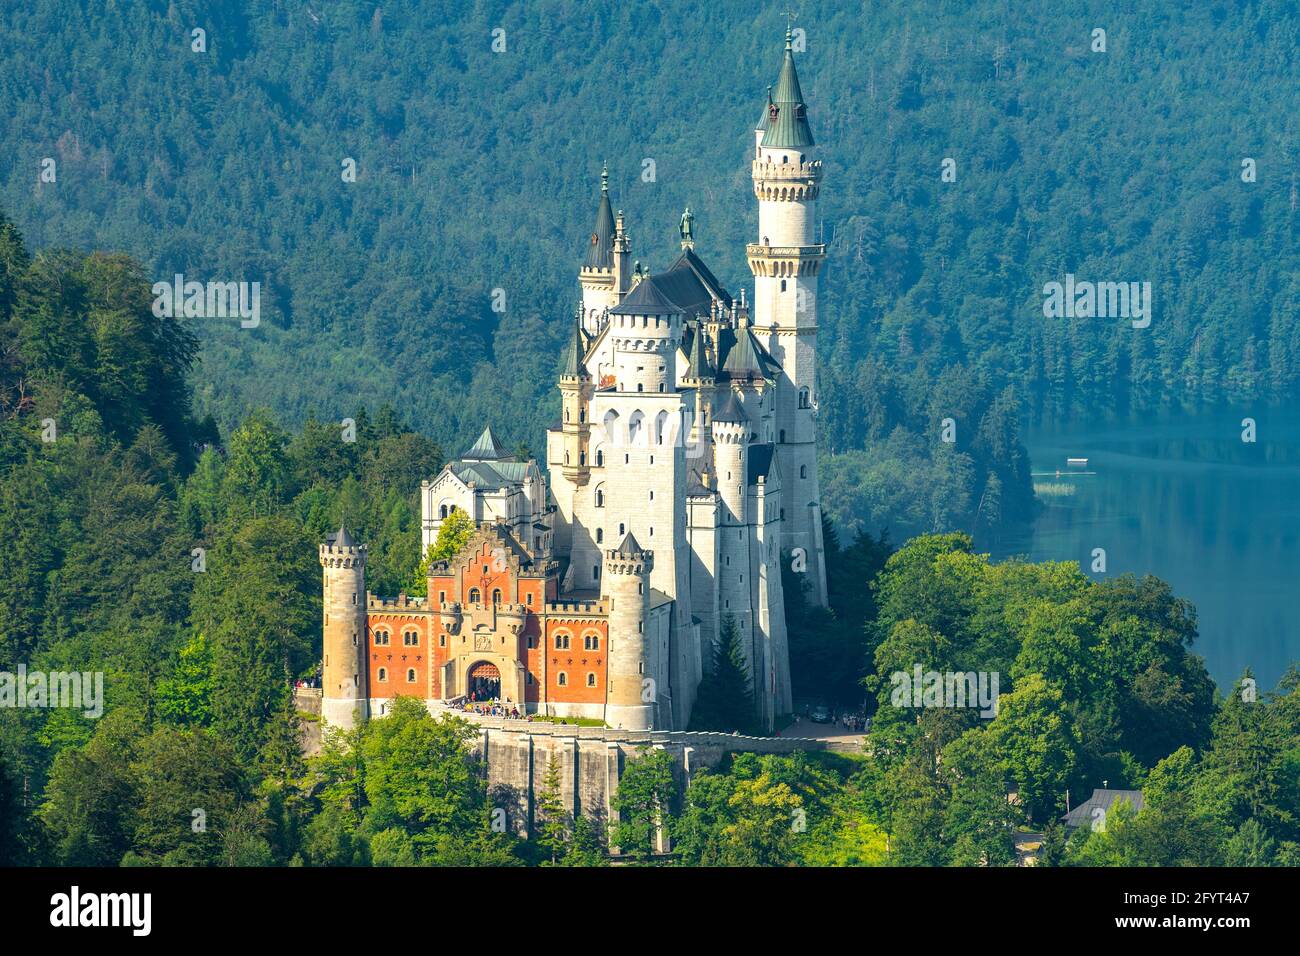 Schloss Neuschwanstein, Hohenschwangau, Germany Stock Photo